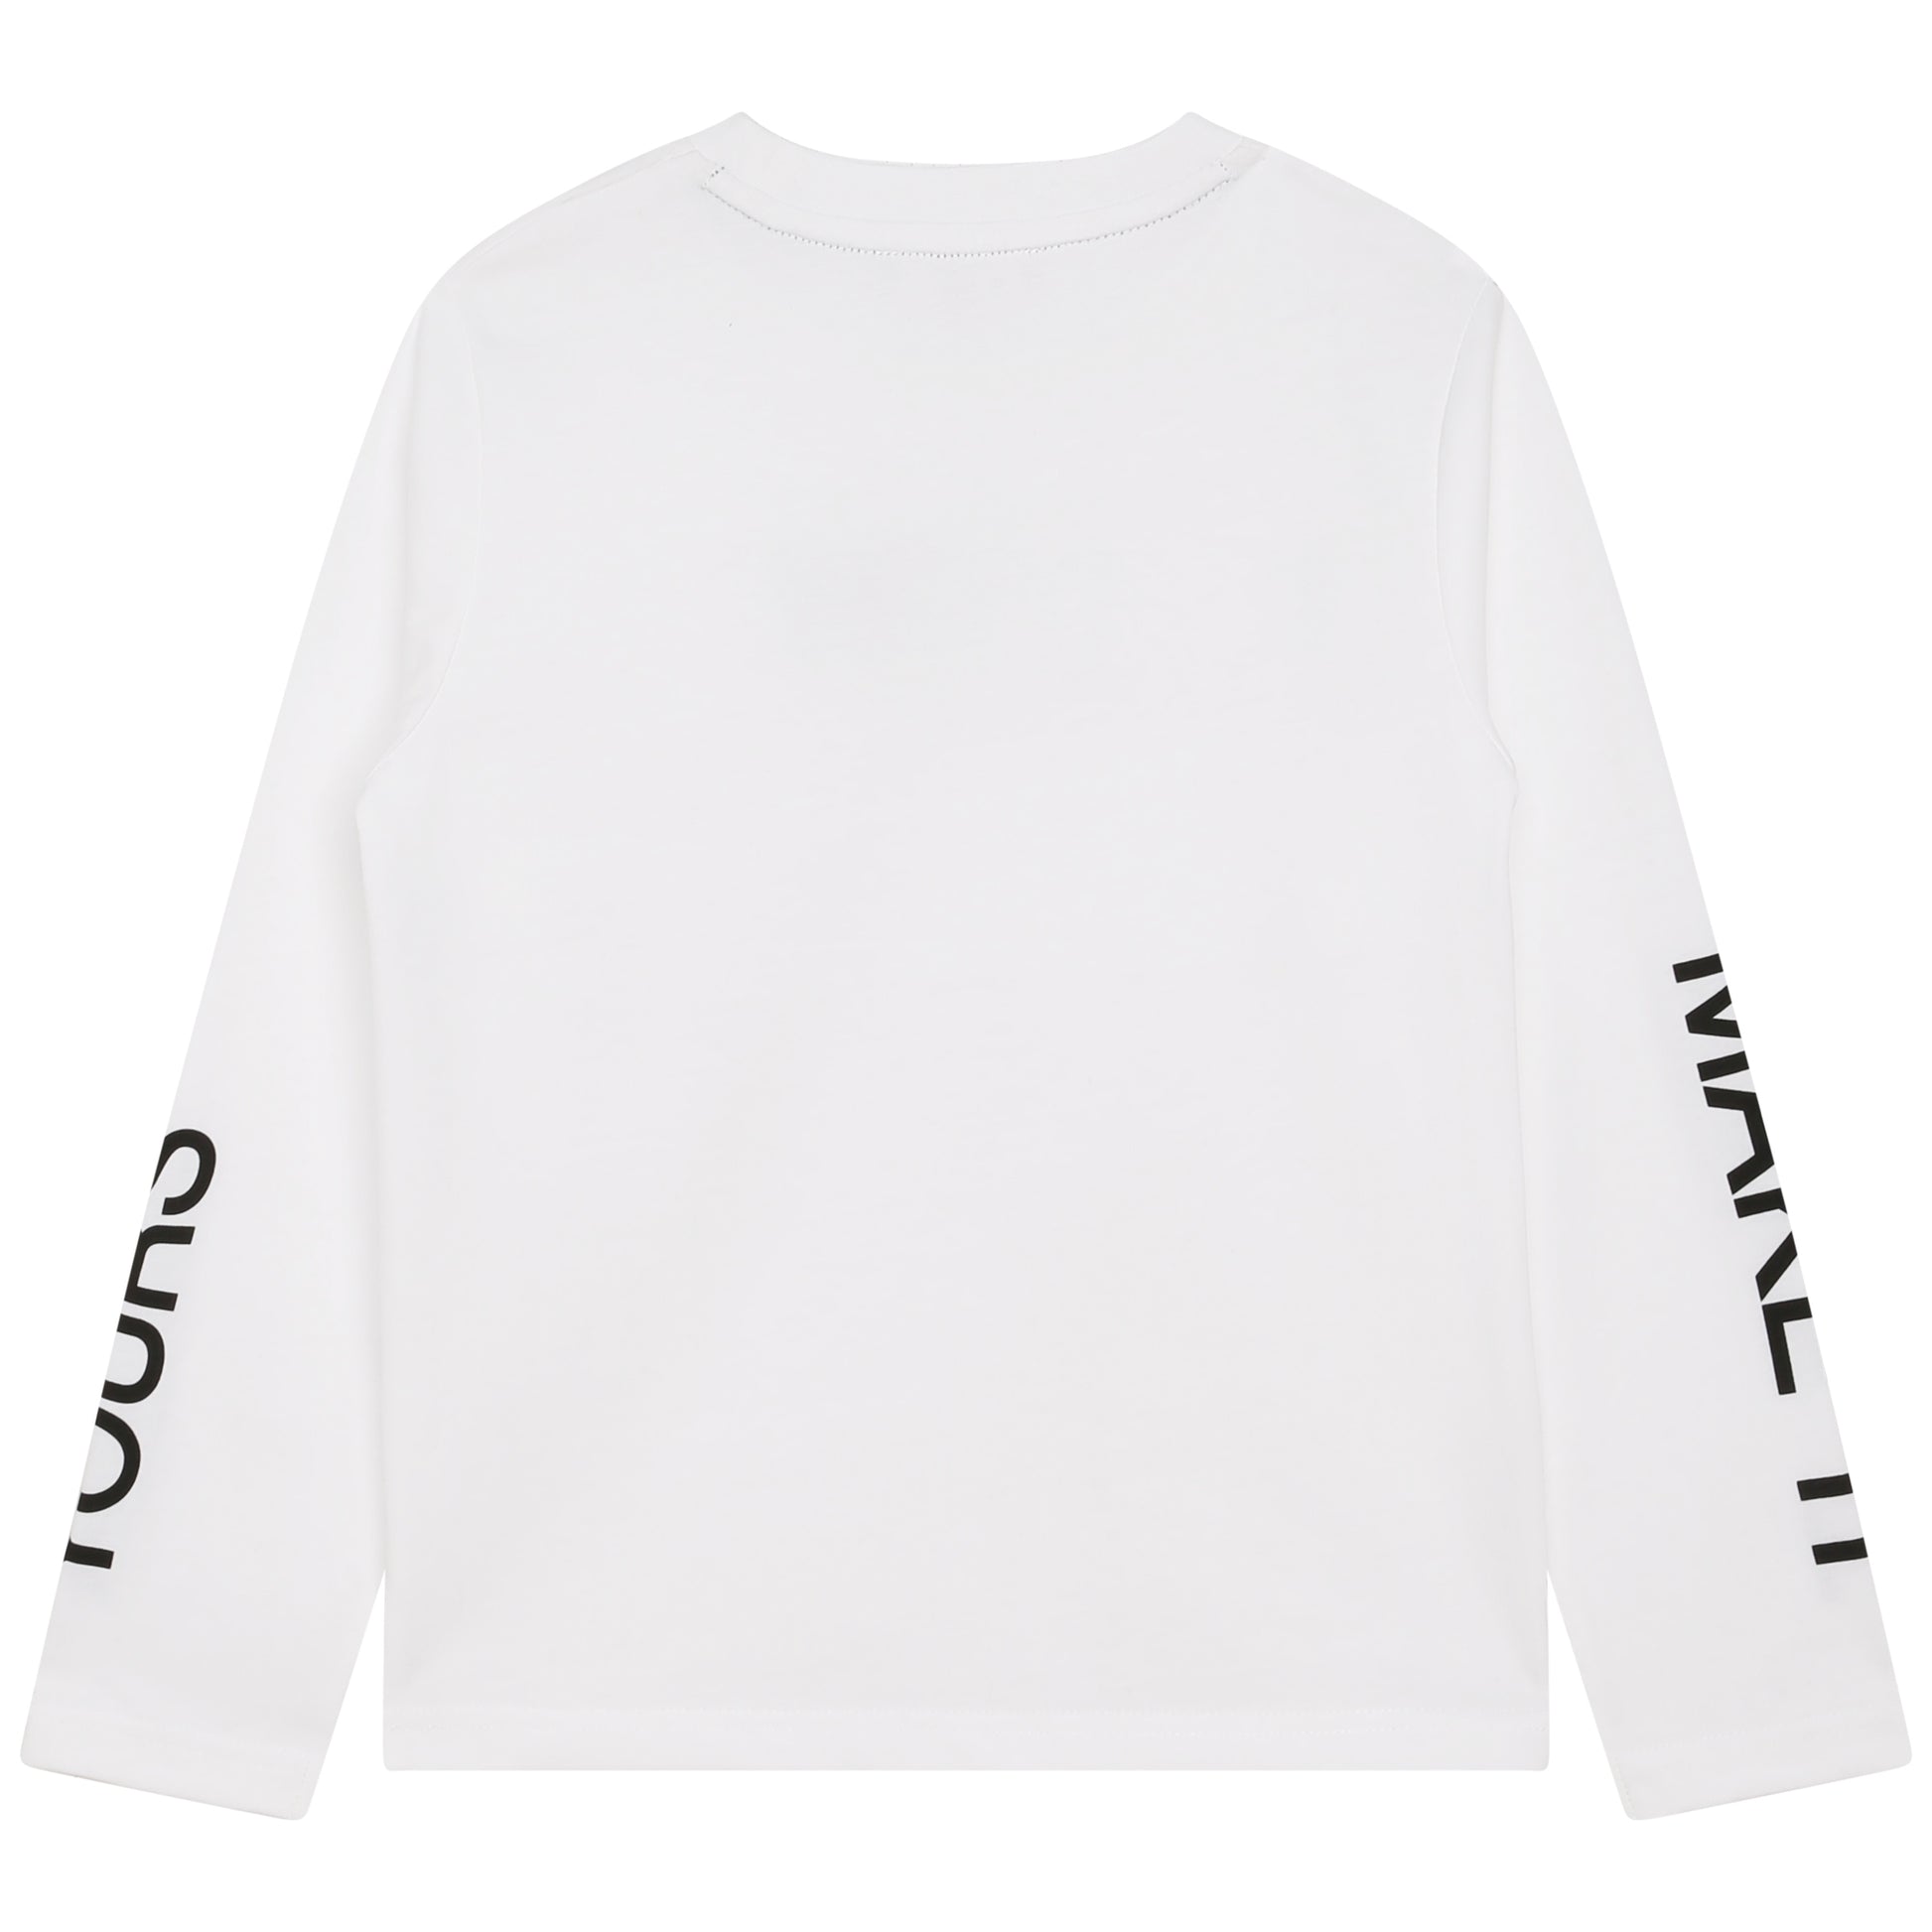 Sleeve _D55007-10P – NorthBoys T-Shirt Boys Junior White DKNY Long